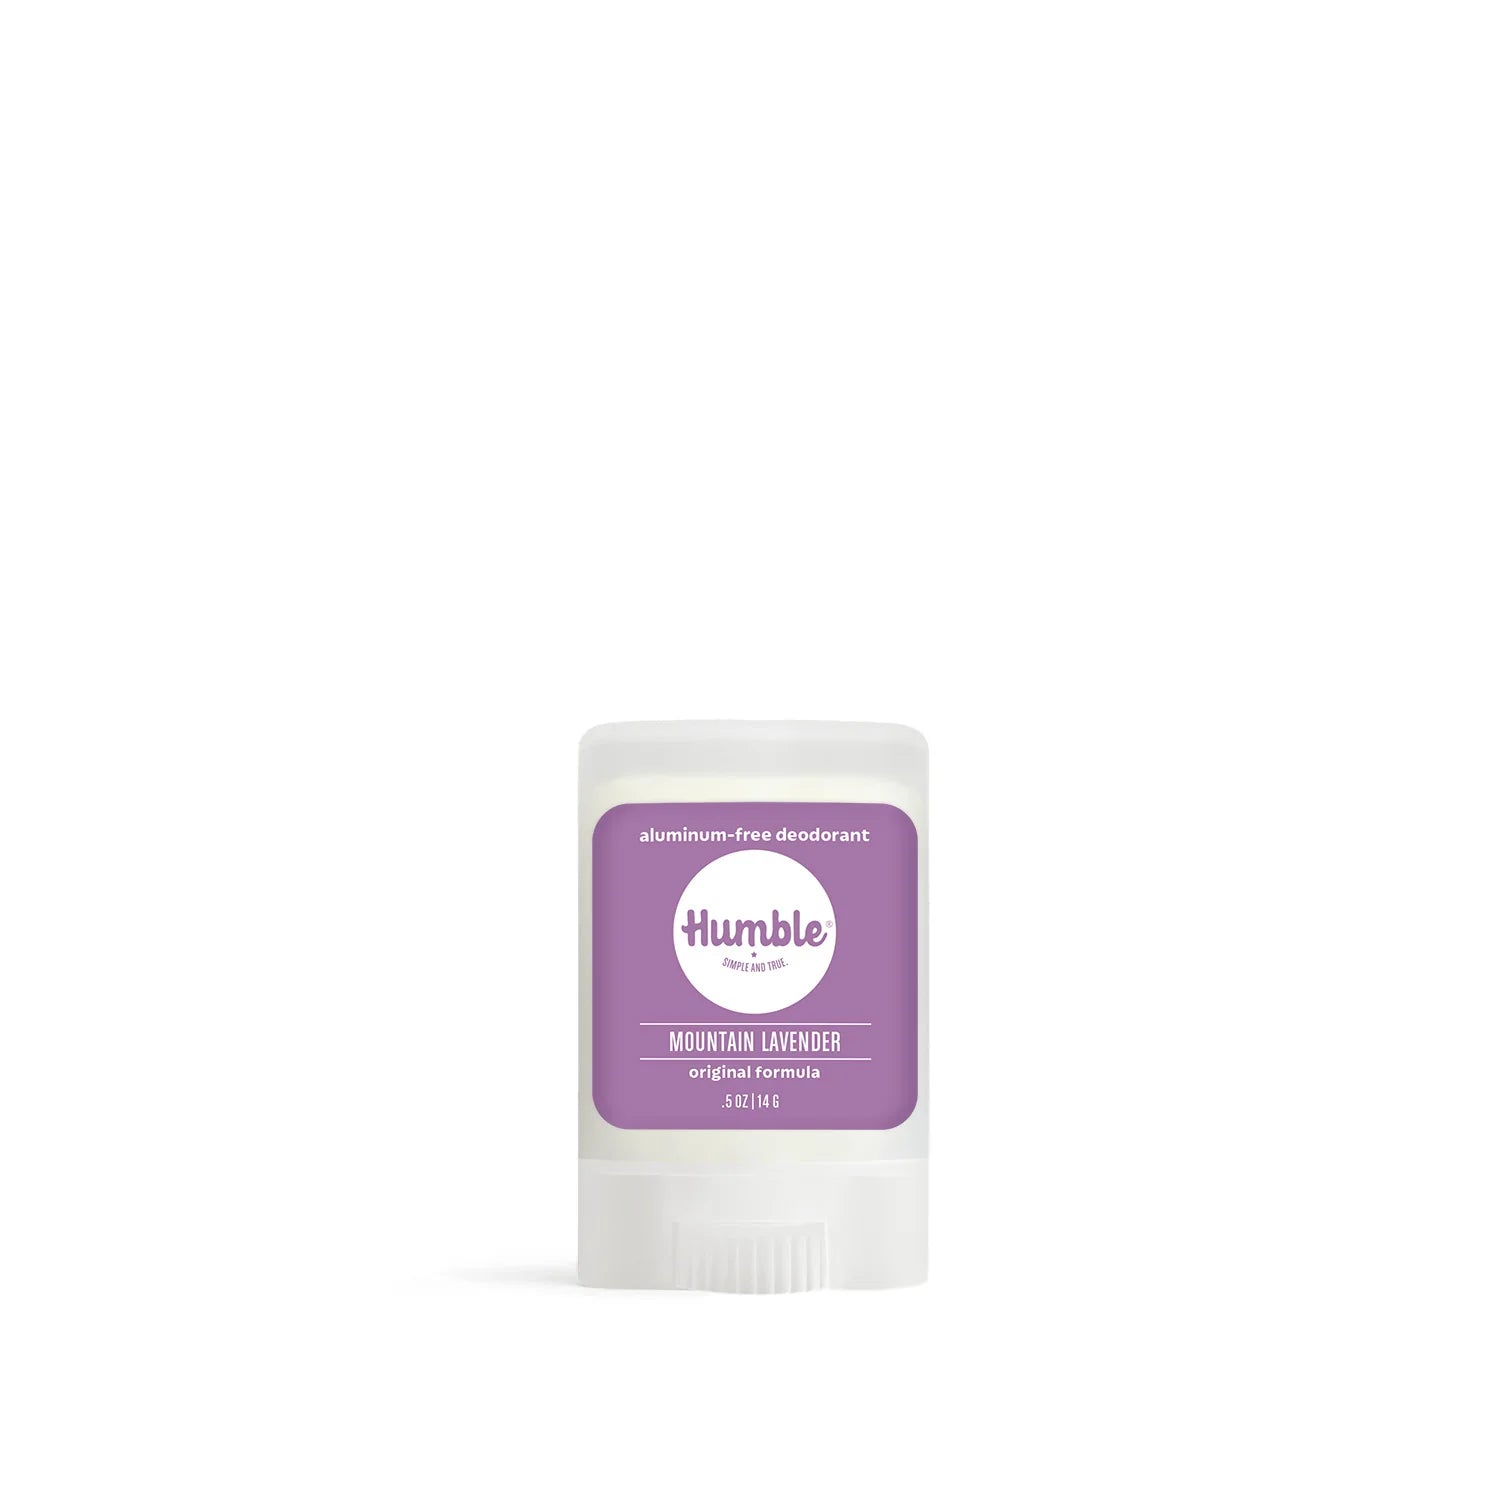 Humble Deodorant Mountain Lavender